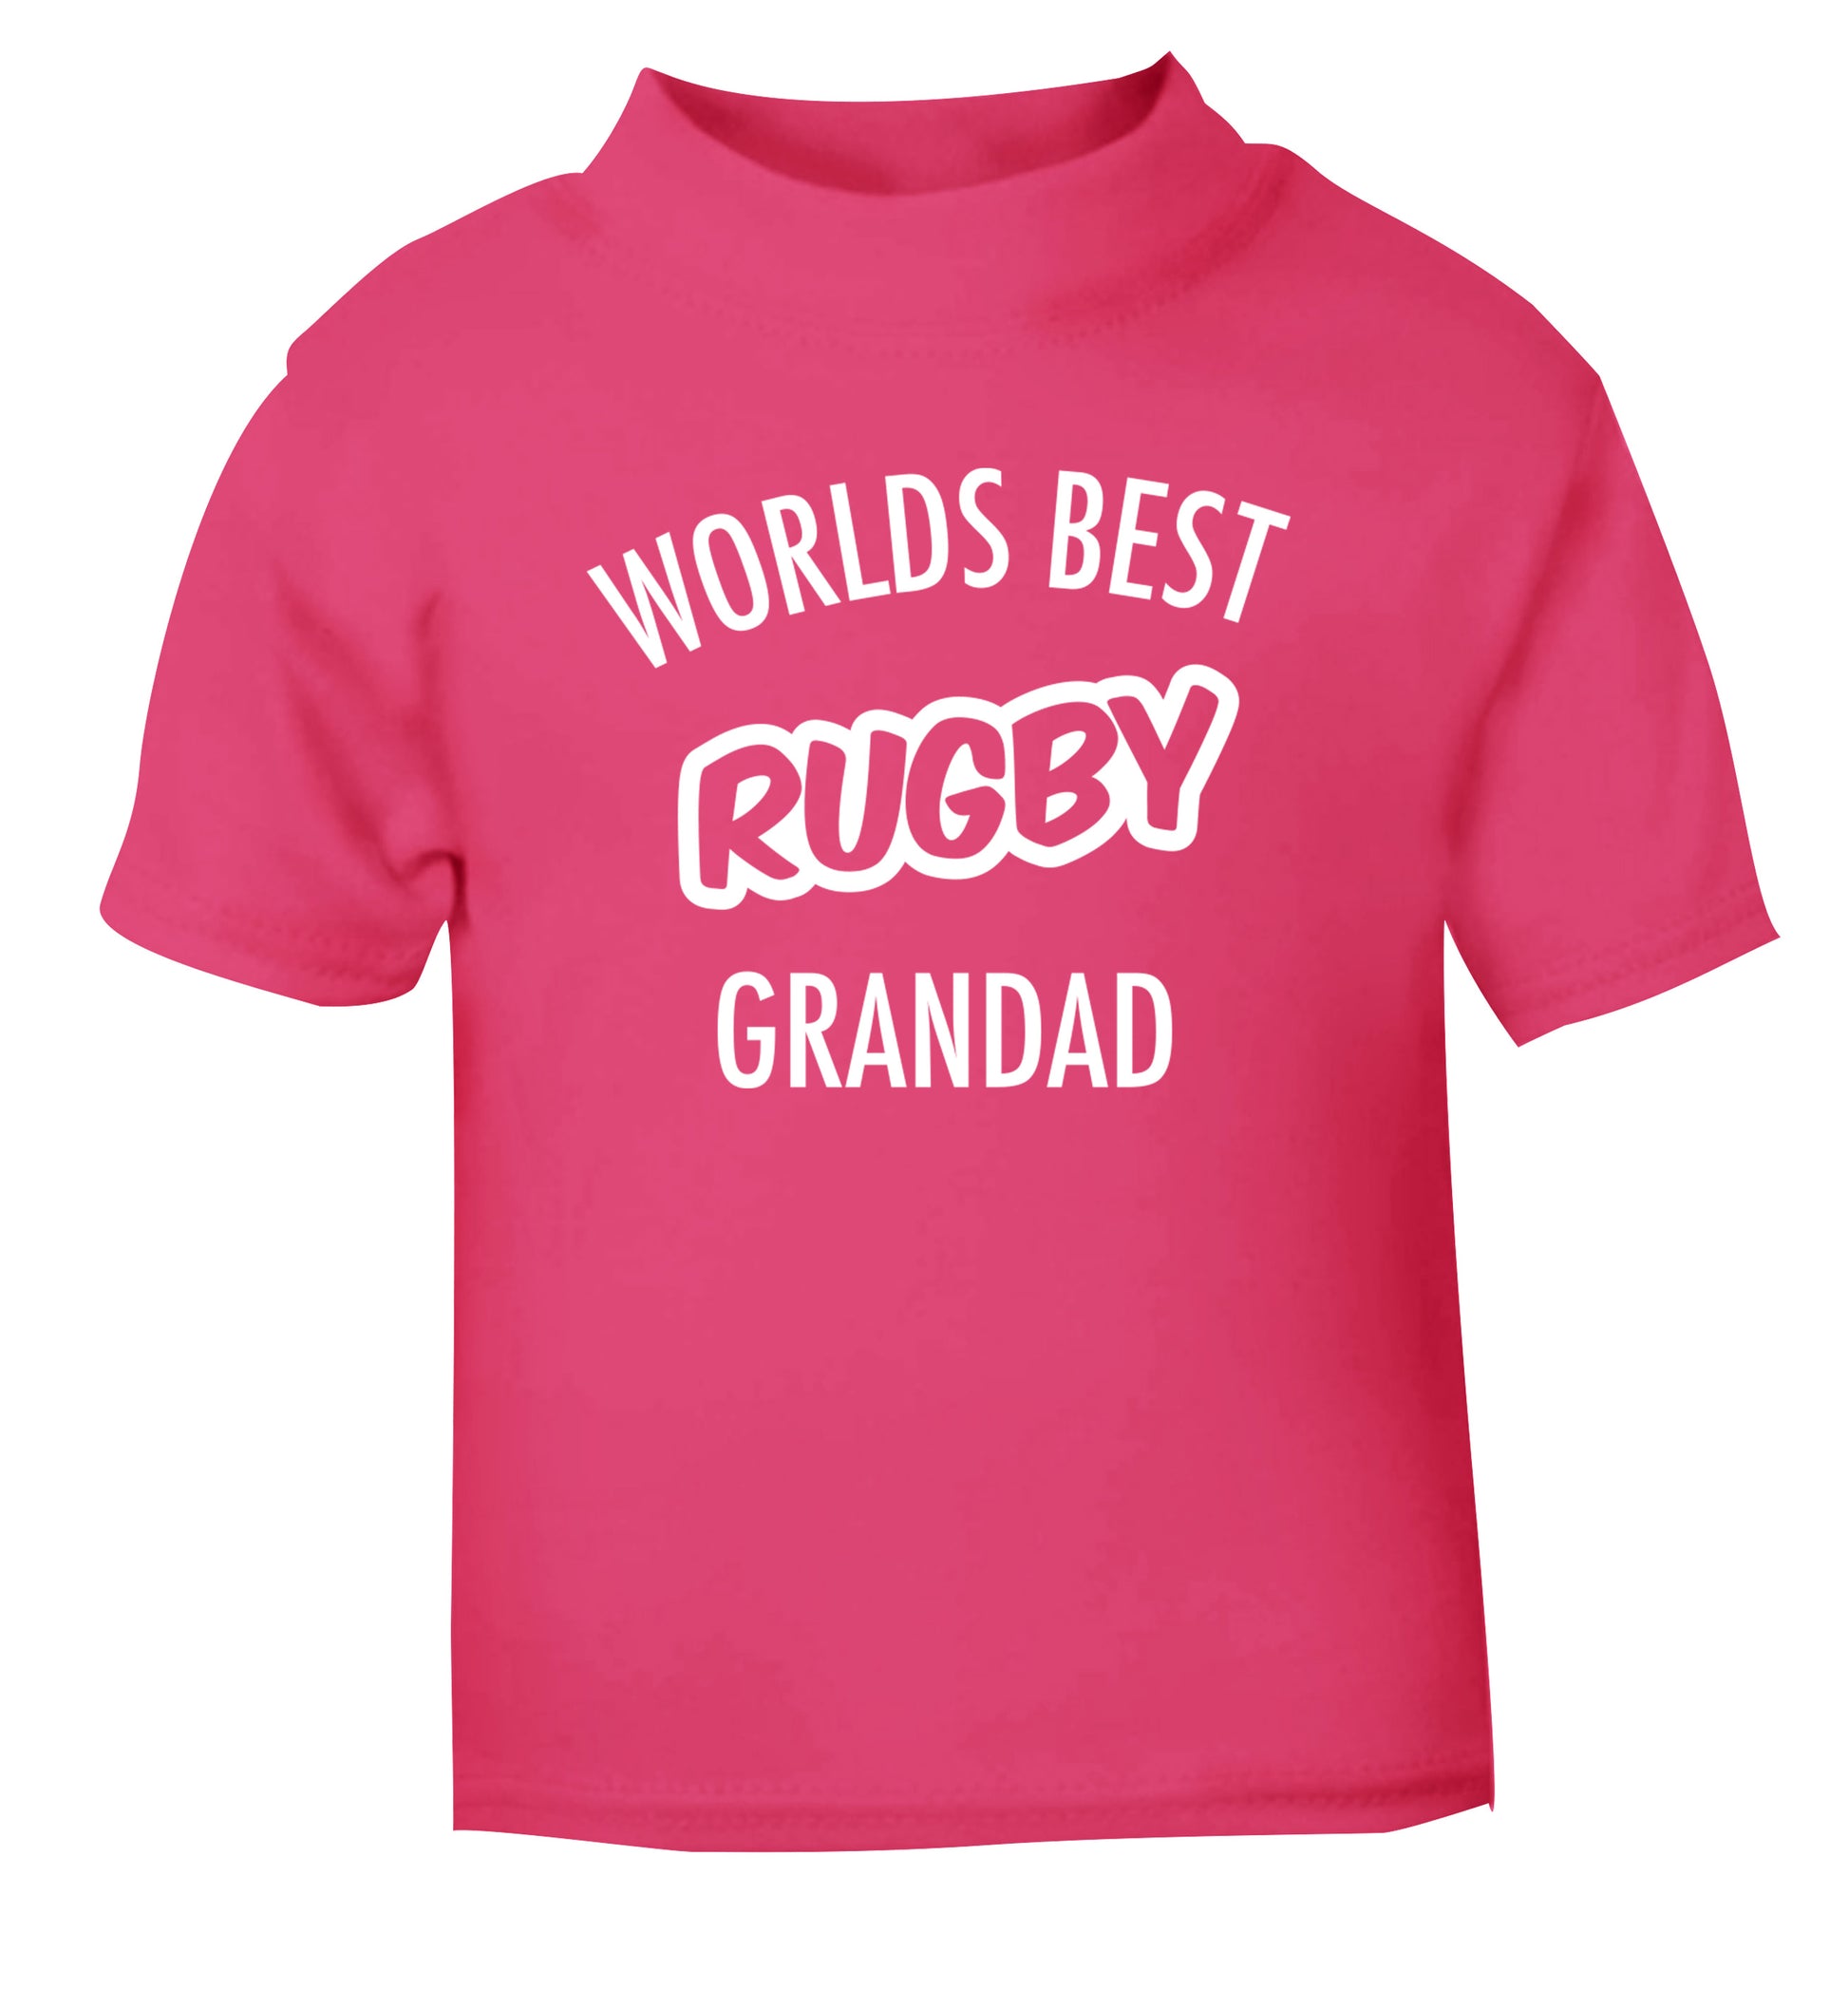 Worlds best rugby grandad pink Baby Toddler Tshirt 2 Years